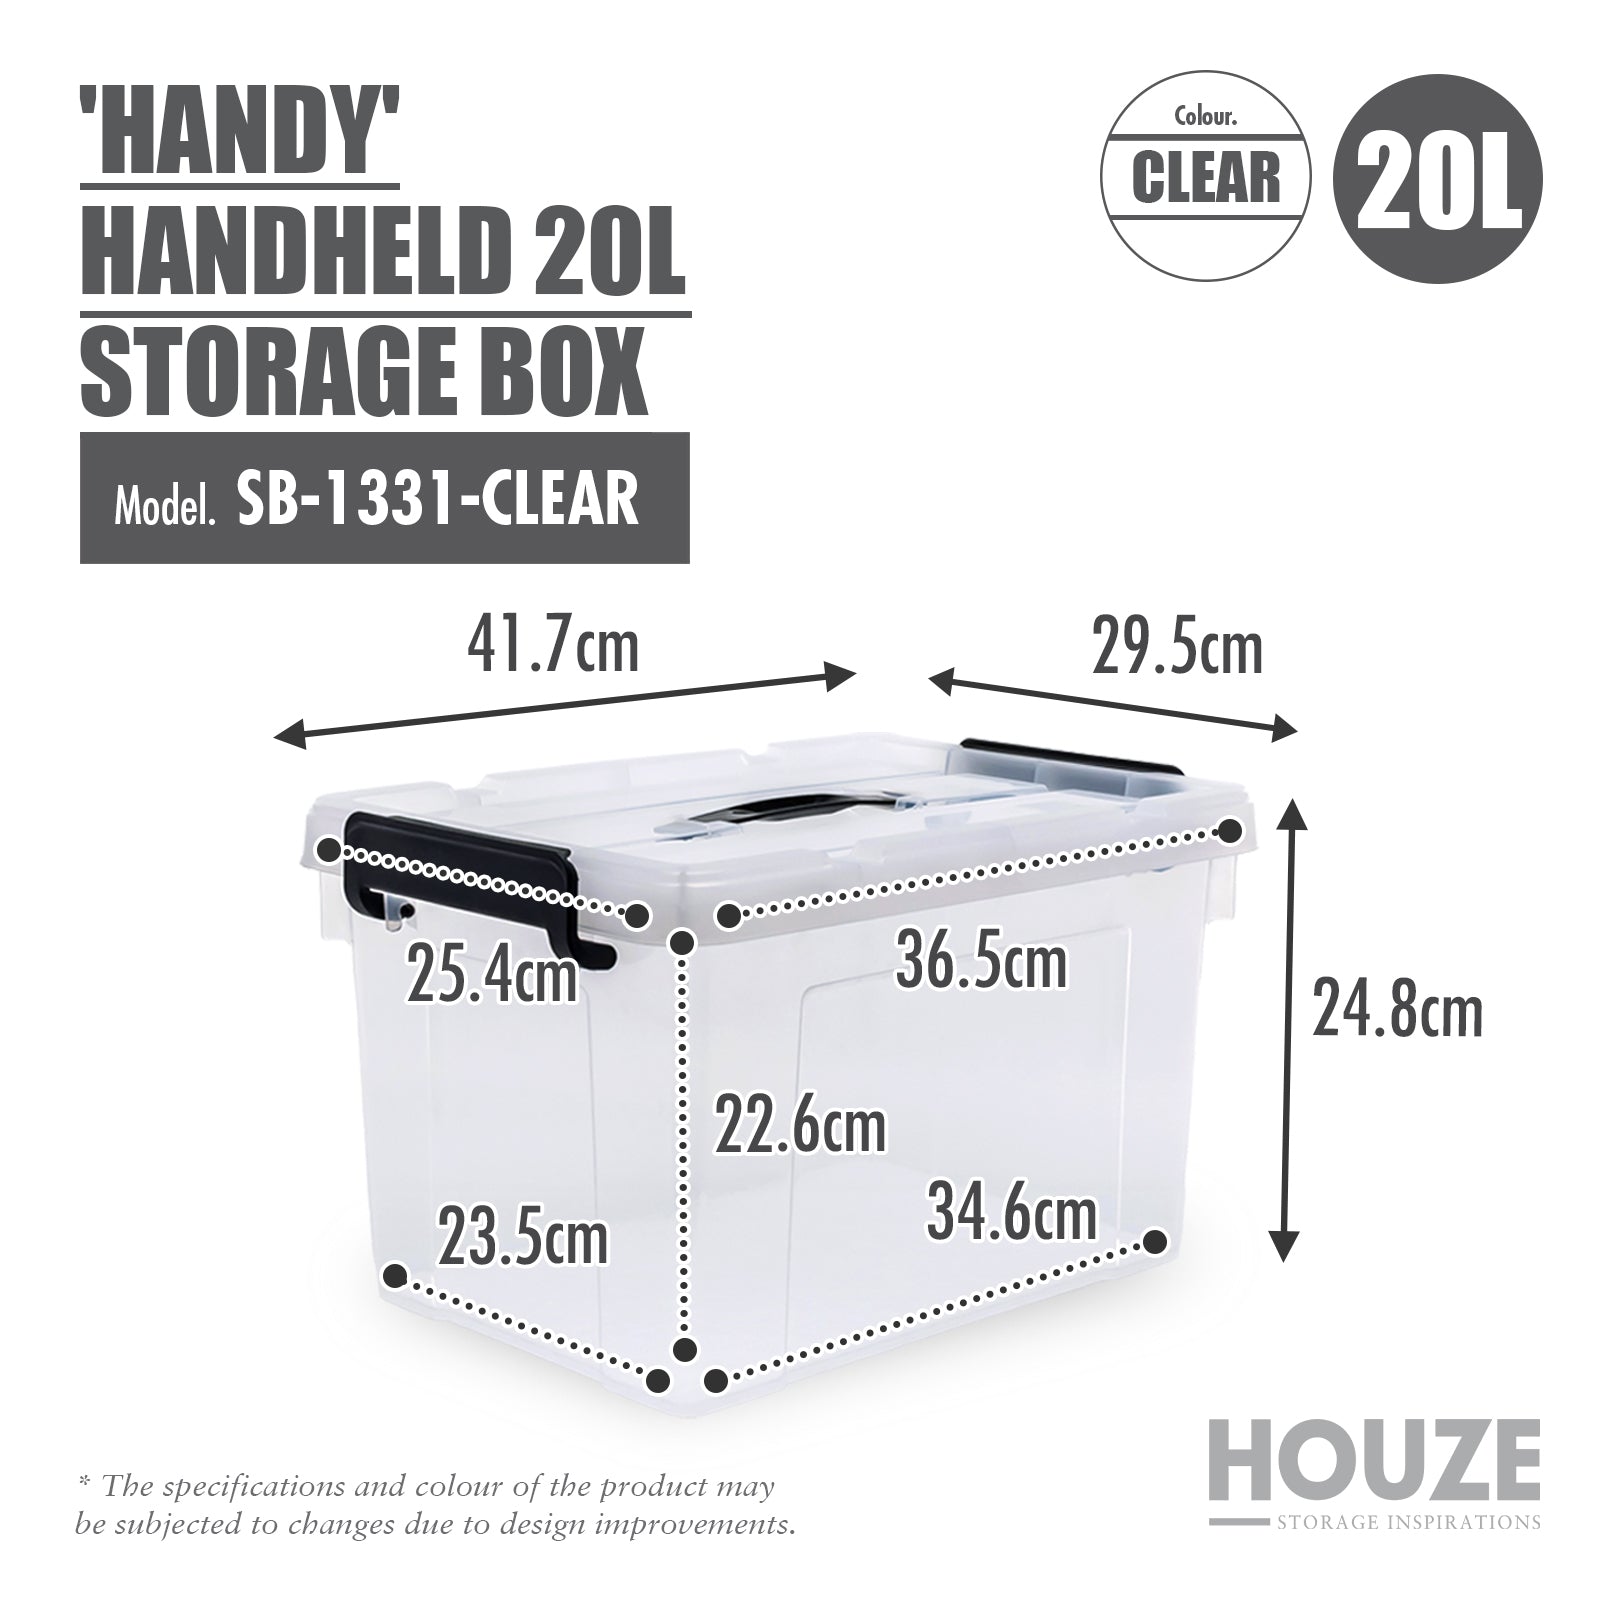 'HANDY' Handheld 20L/33L/47L/63L Storage Box: Your Storage Companion